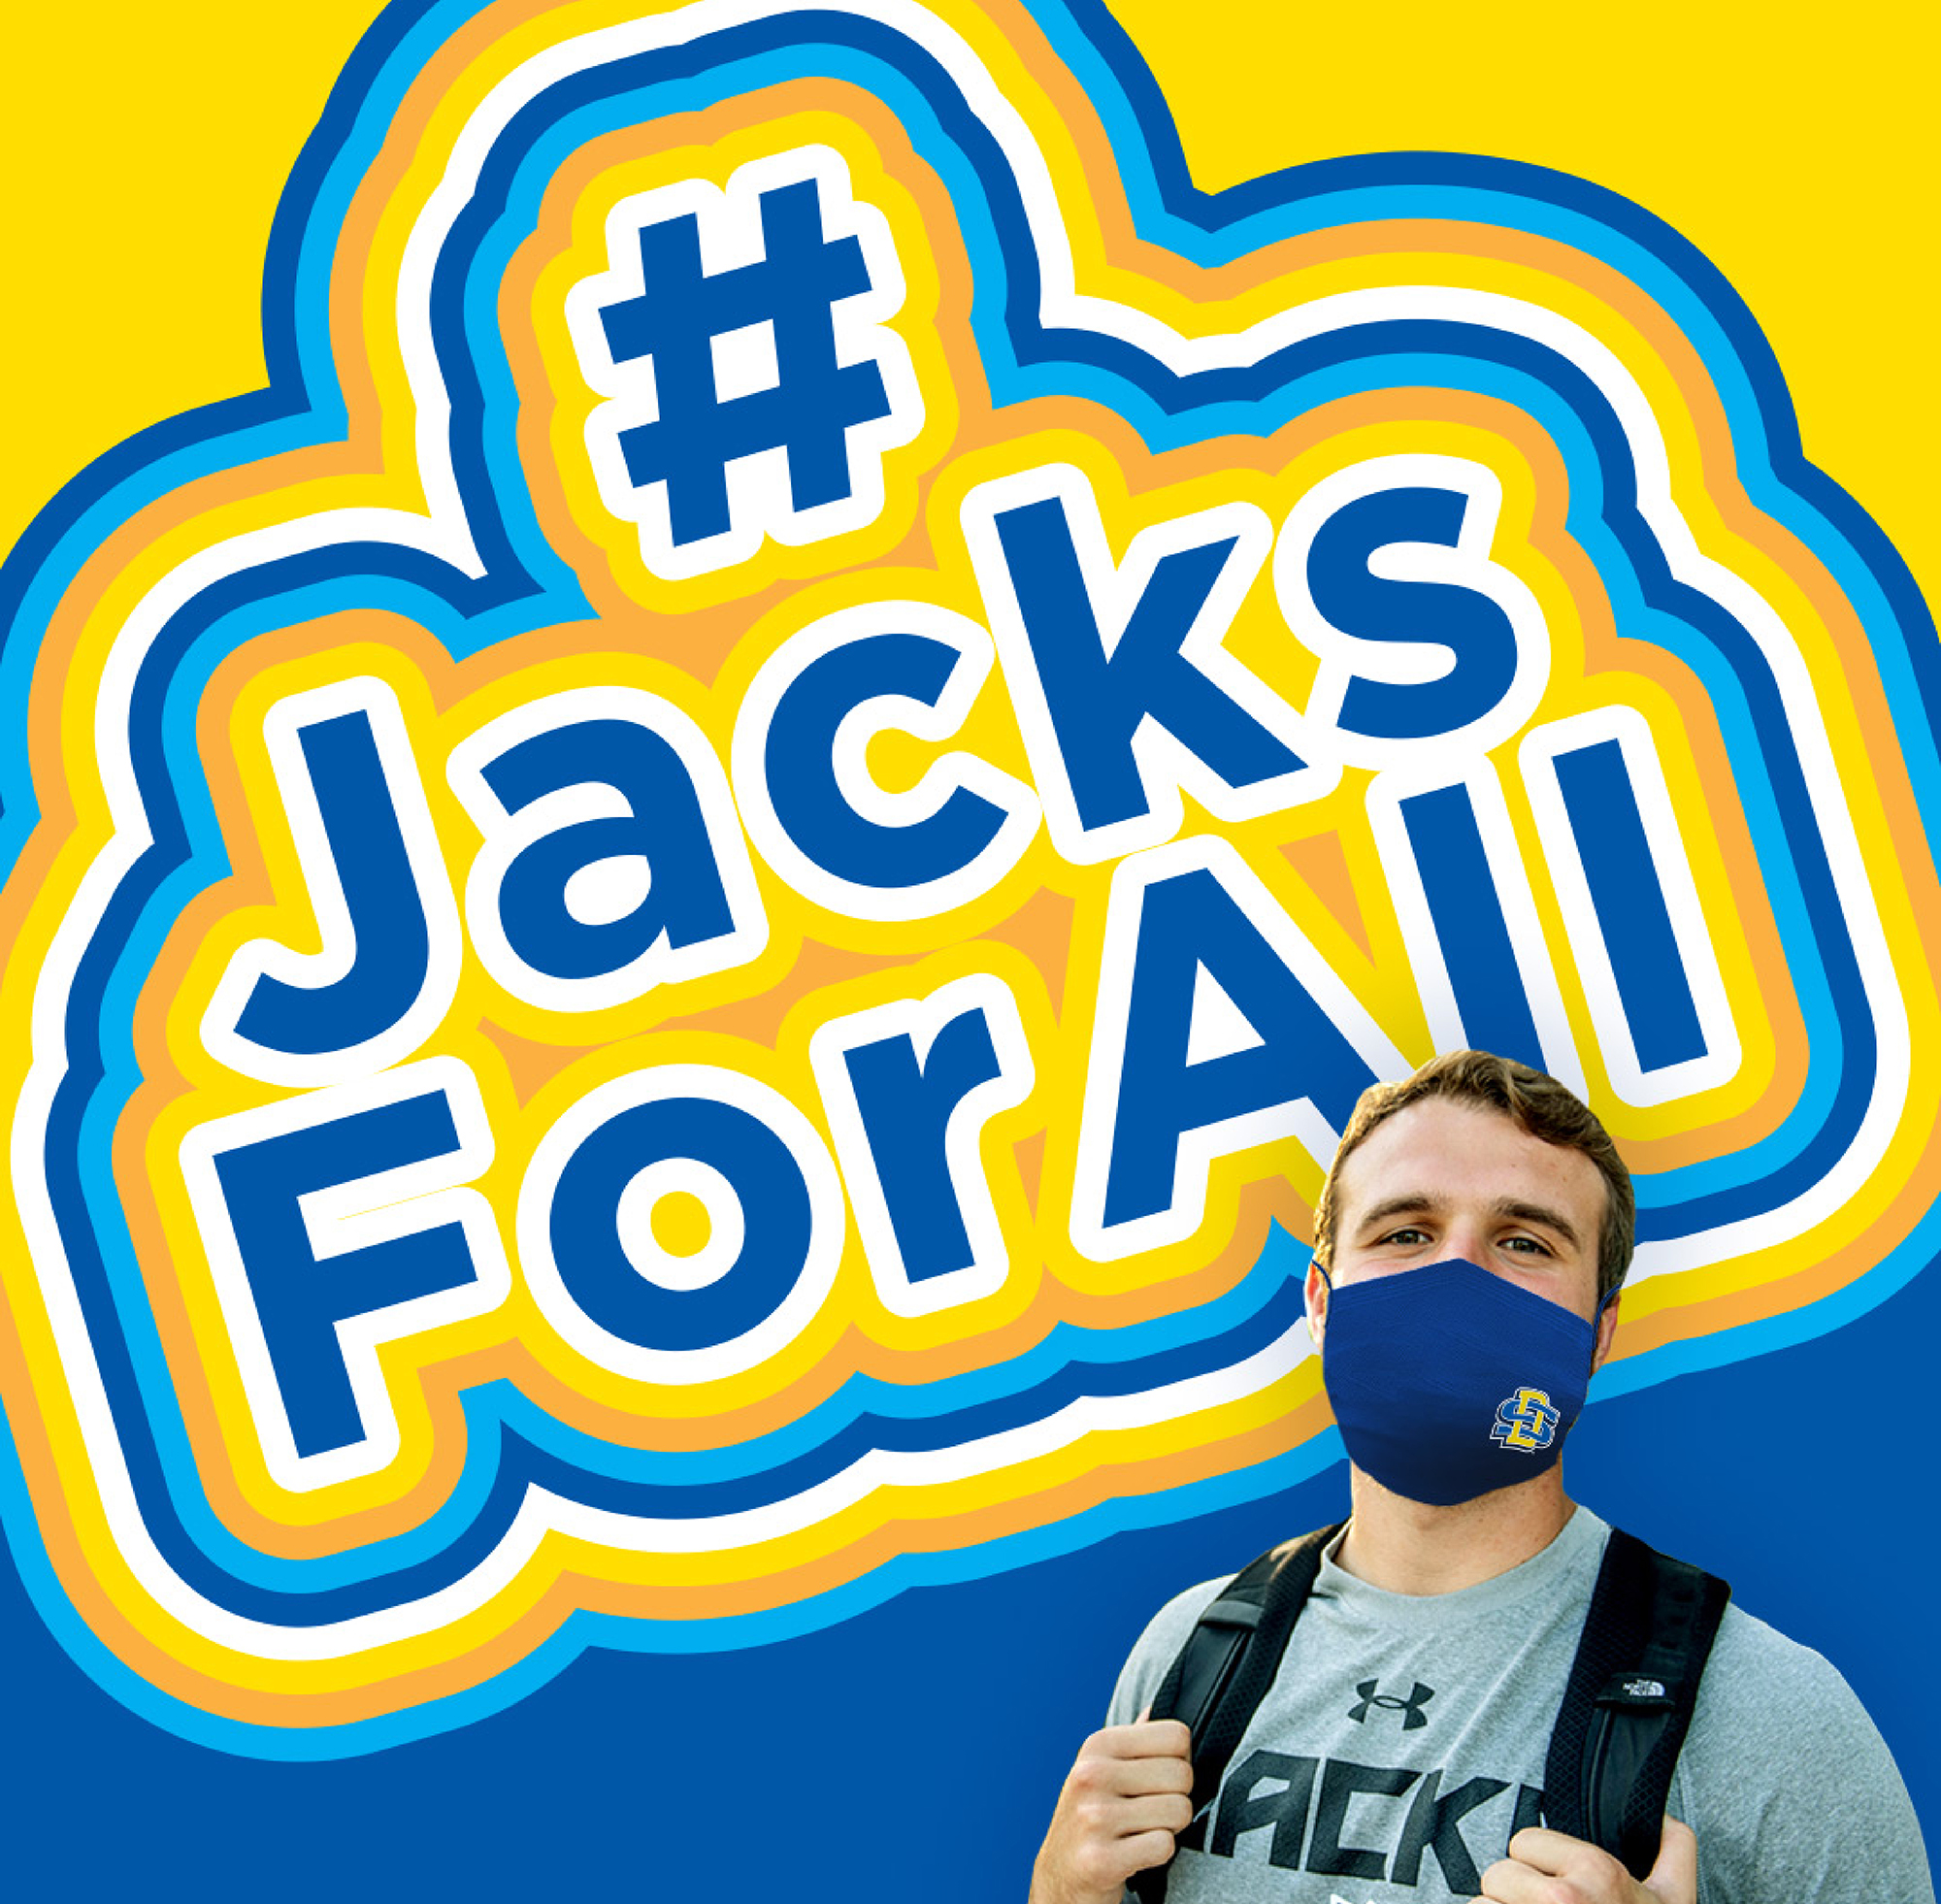 Jacks for All